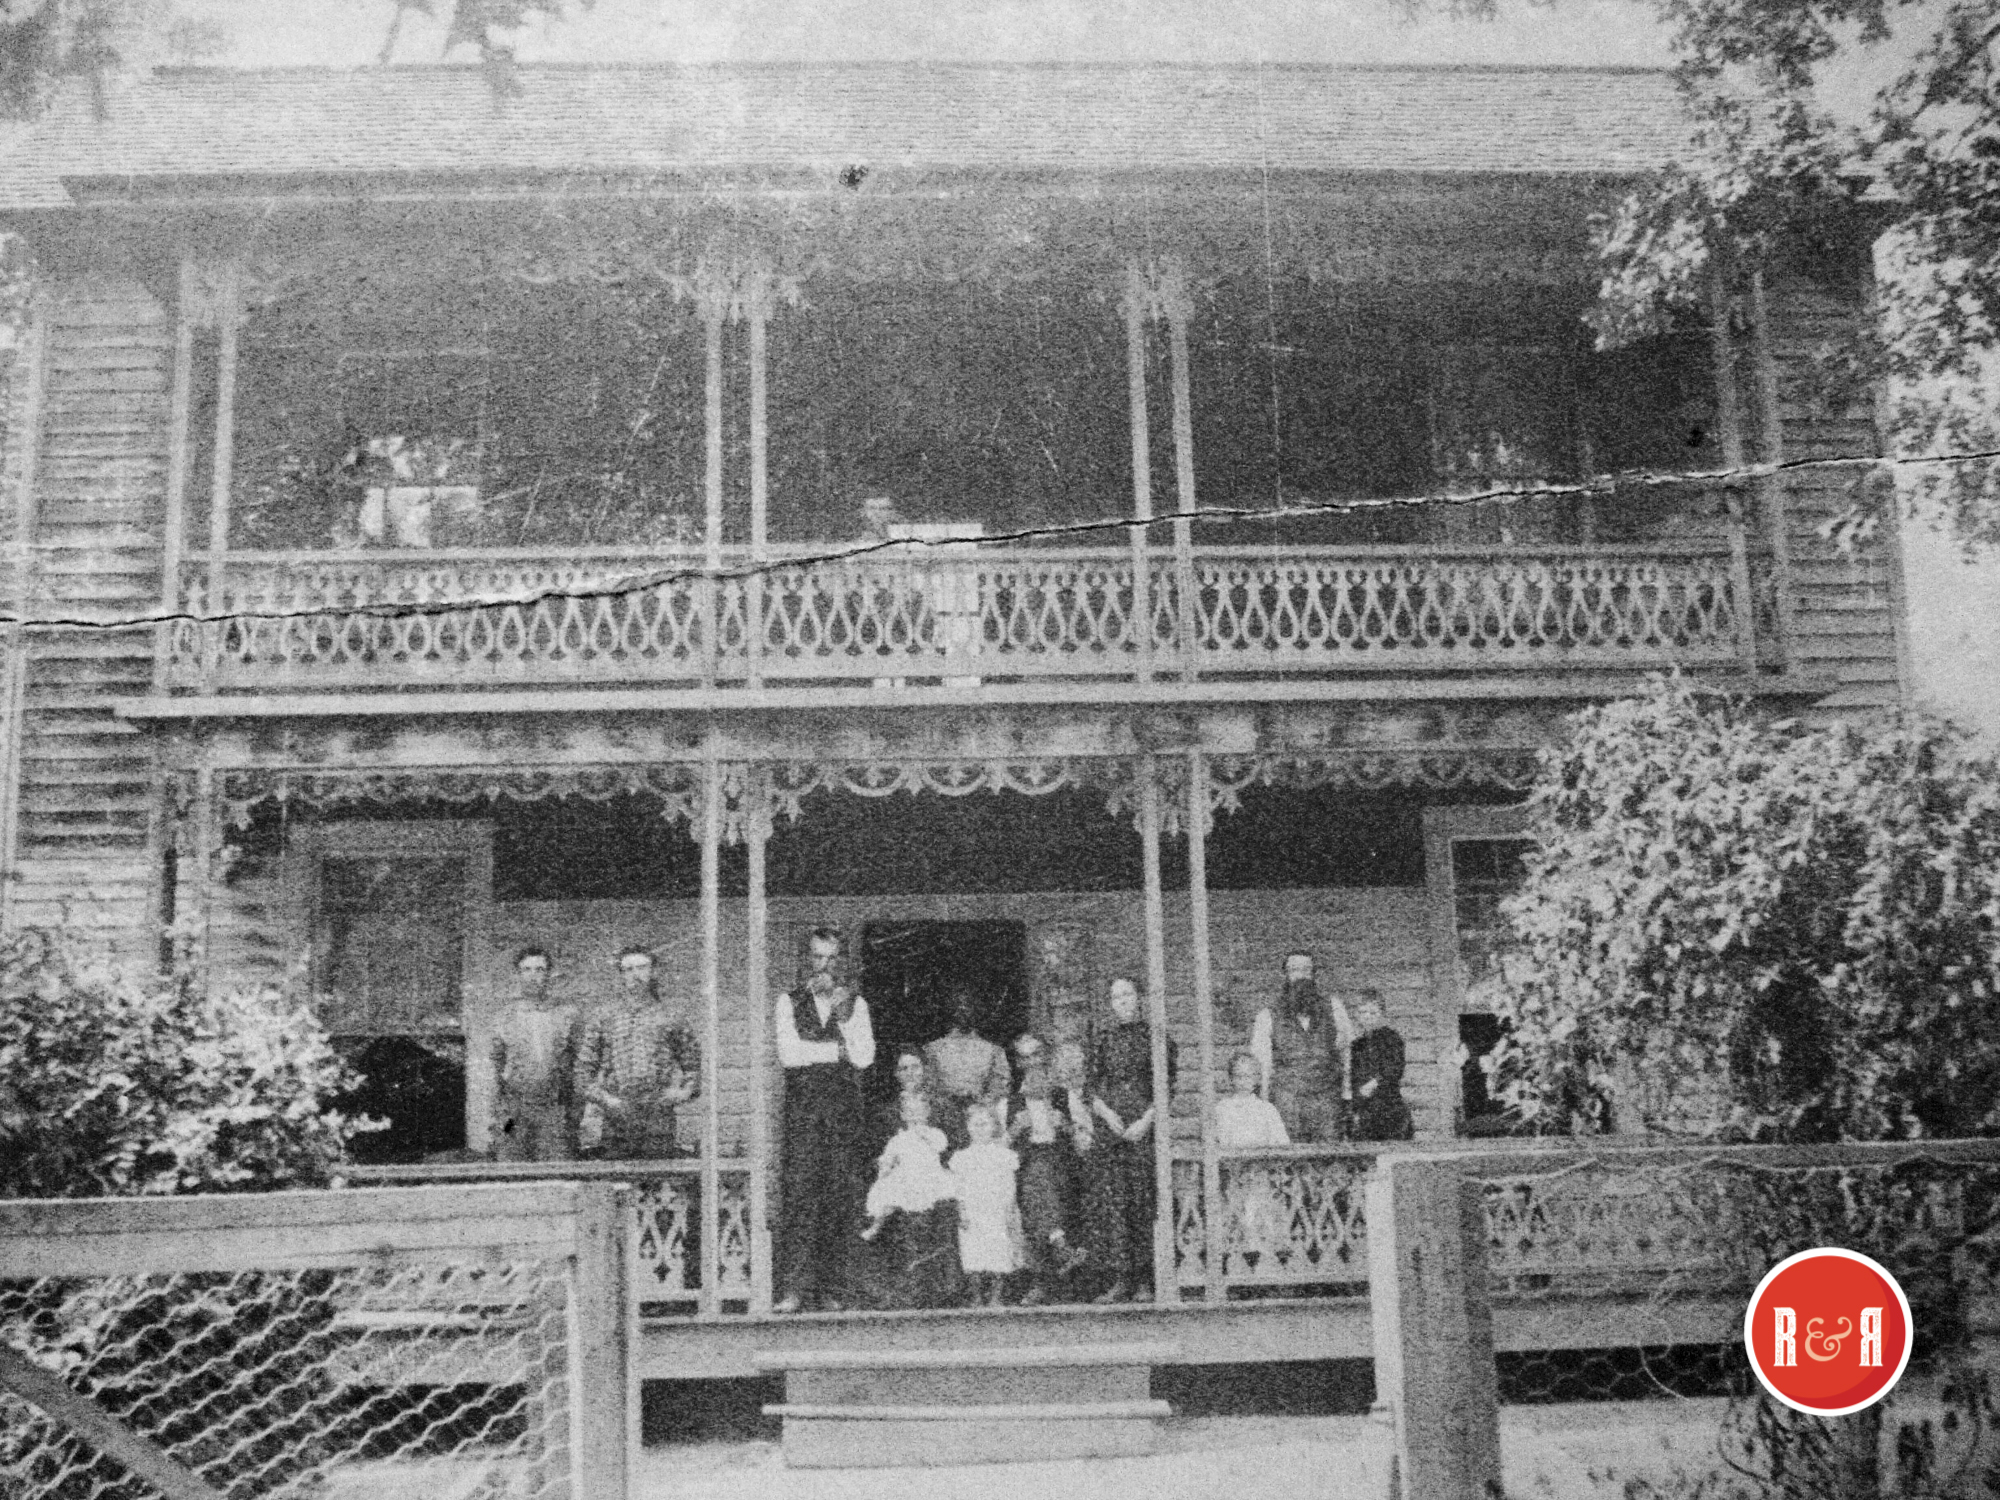 CALDWELL HOME IMAGE CA. 1900